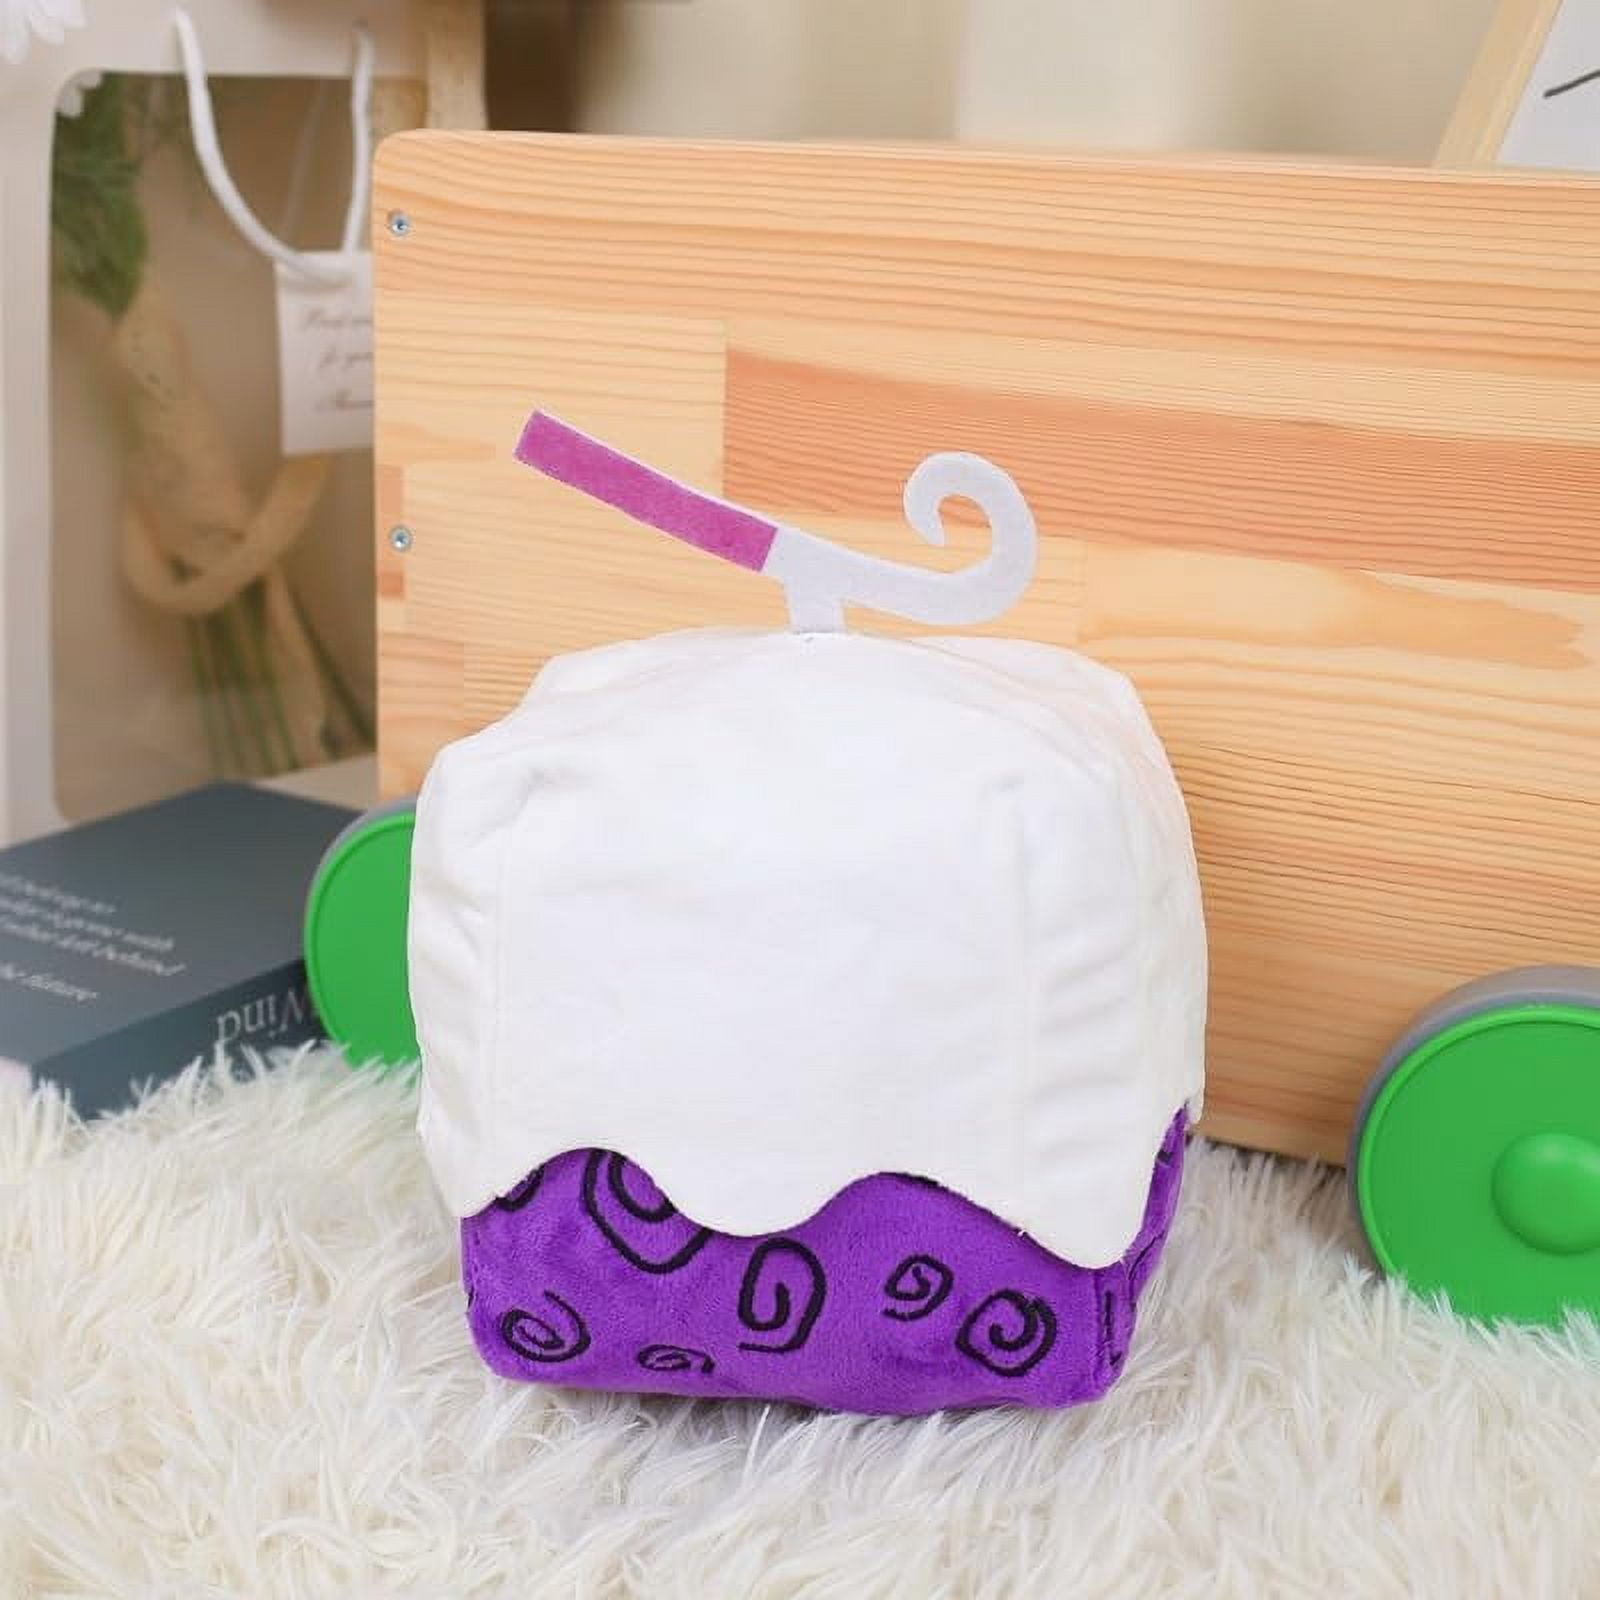  6 Blox Fruits Plush Plushies Toy Plush Pillow Stuffed Animal,  Soft Kawaii Hugging Plush Squishy Pillow Toy Gifts for Kids Child Teens  Home Bedroom Decor (Portal) : Toys & Games